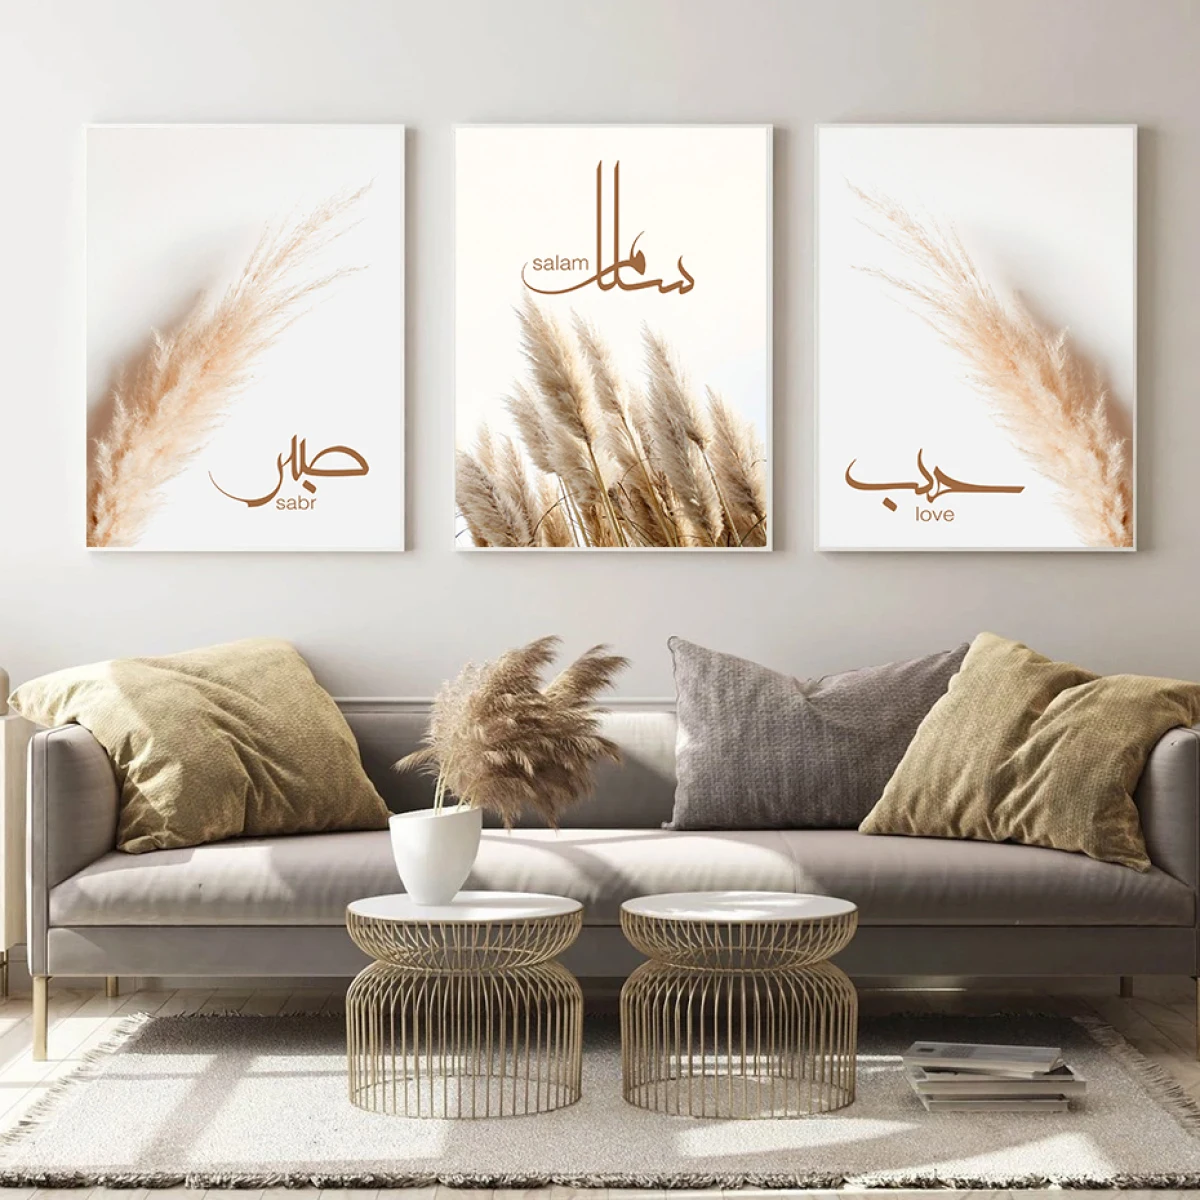 

Bohemia Pampas Grass Islamic Wall Art Canvas Love Salam Sabr Calligraphy Poster and Prints Print Paintings Bedroom Home Decor